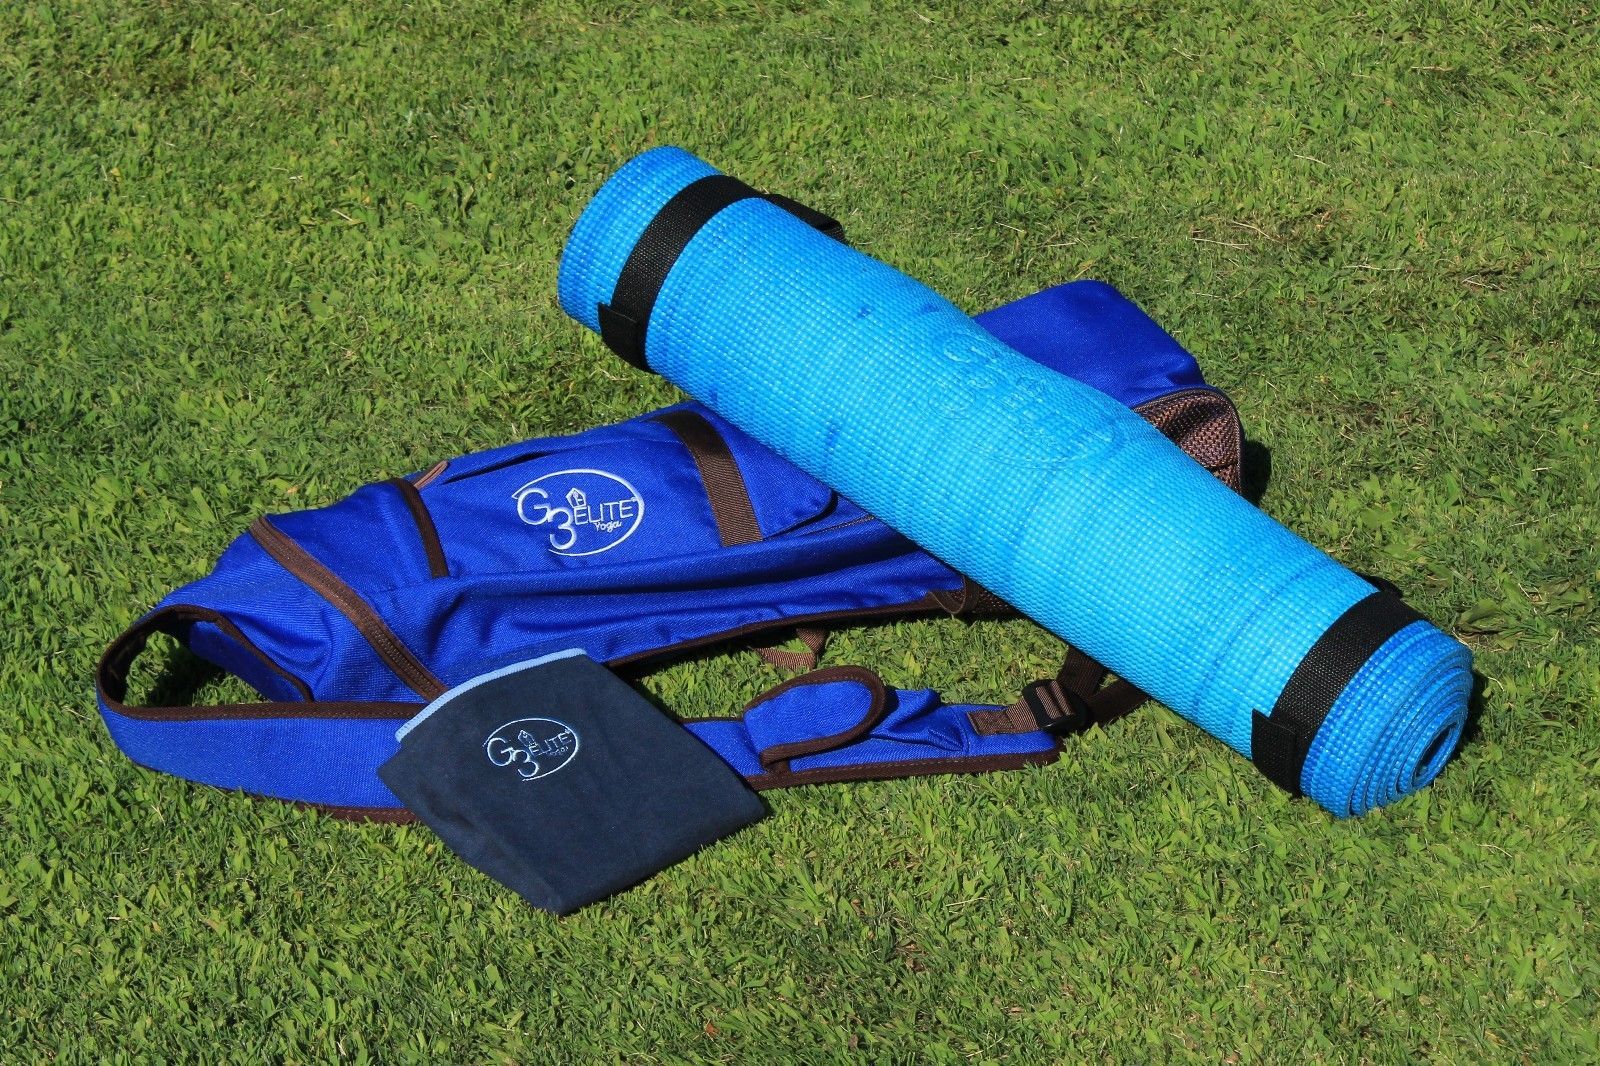 G3Elite Yoga Set, Blue/Dark Blue Combo Starter Kit - Mat, Sling, Bag, and Towel - $69.95